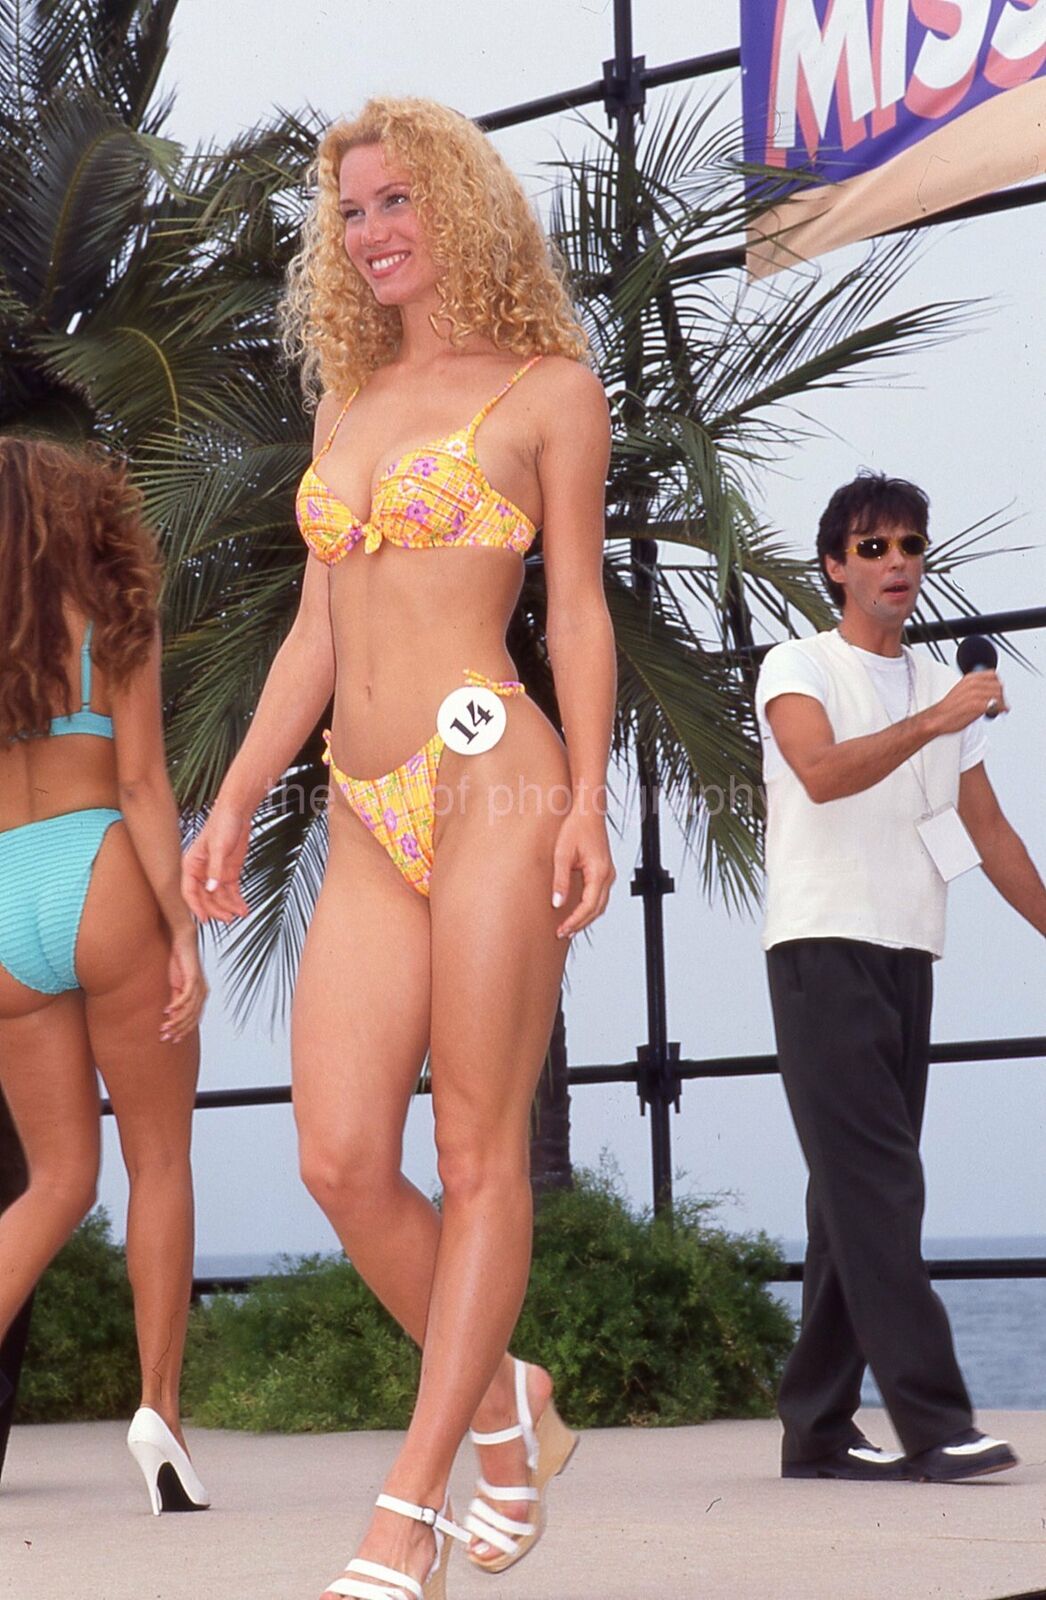 BIKINI GIRL Beach 35mm FOUND SLIDE Transparency PRETTY WOMAN Photo Poster painting 09 T 3 E